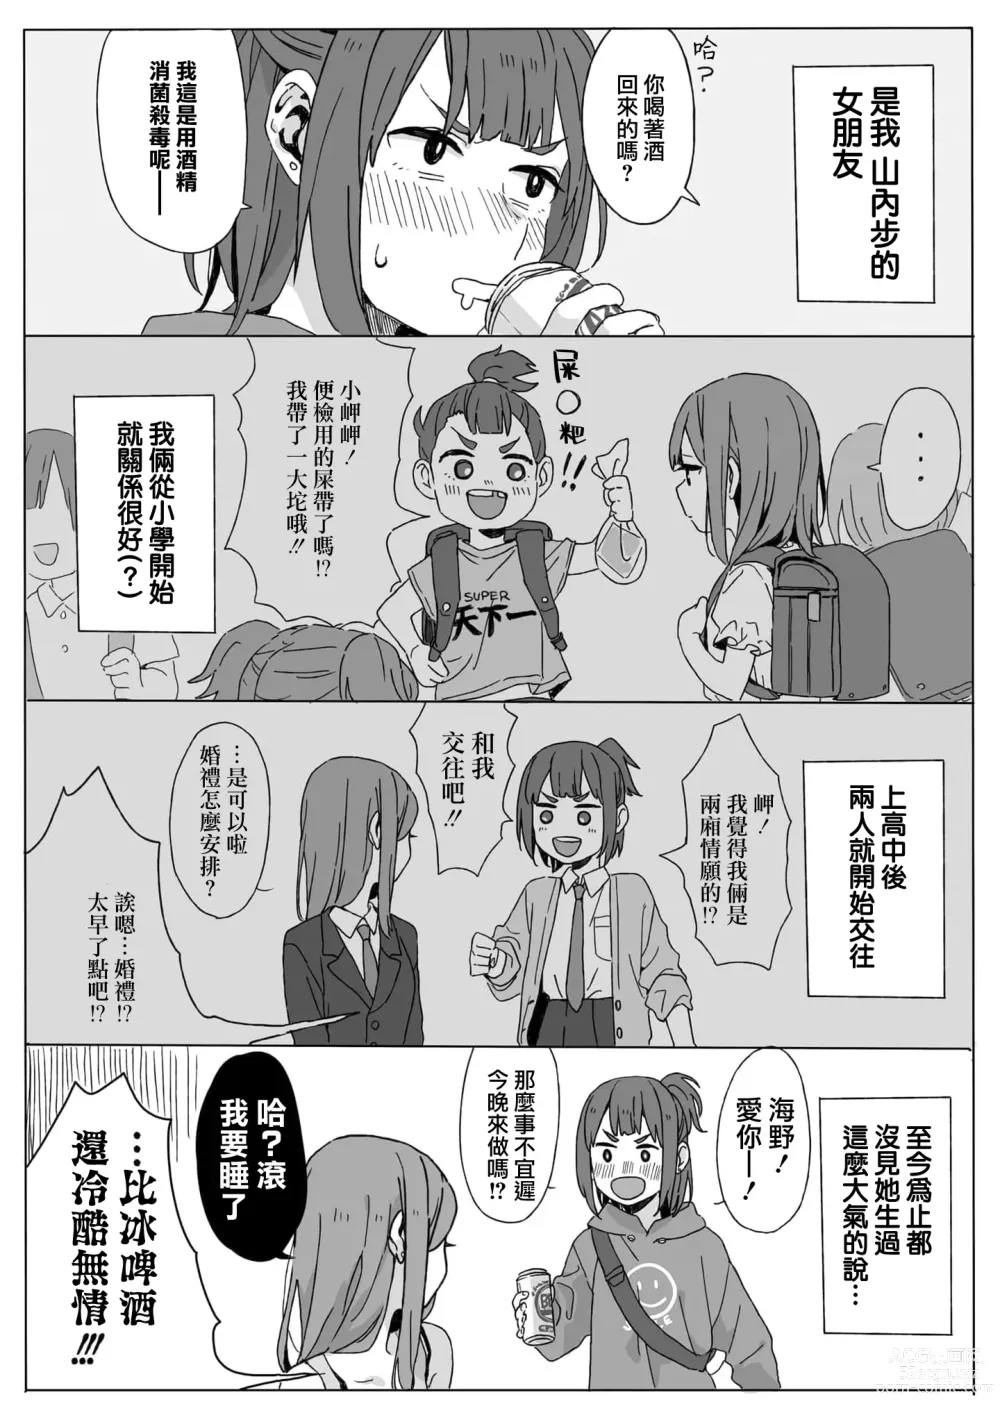 Page 3 of manga 山内小姐和海野小姐的回合。